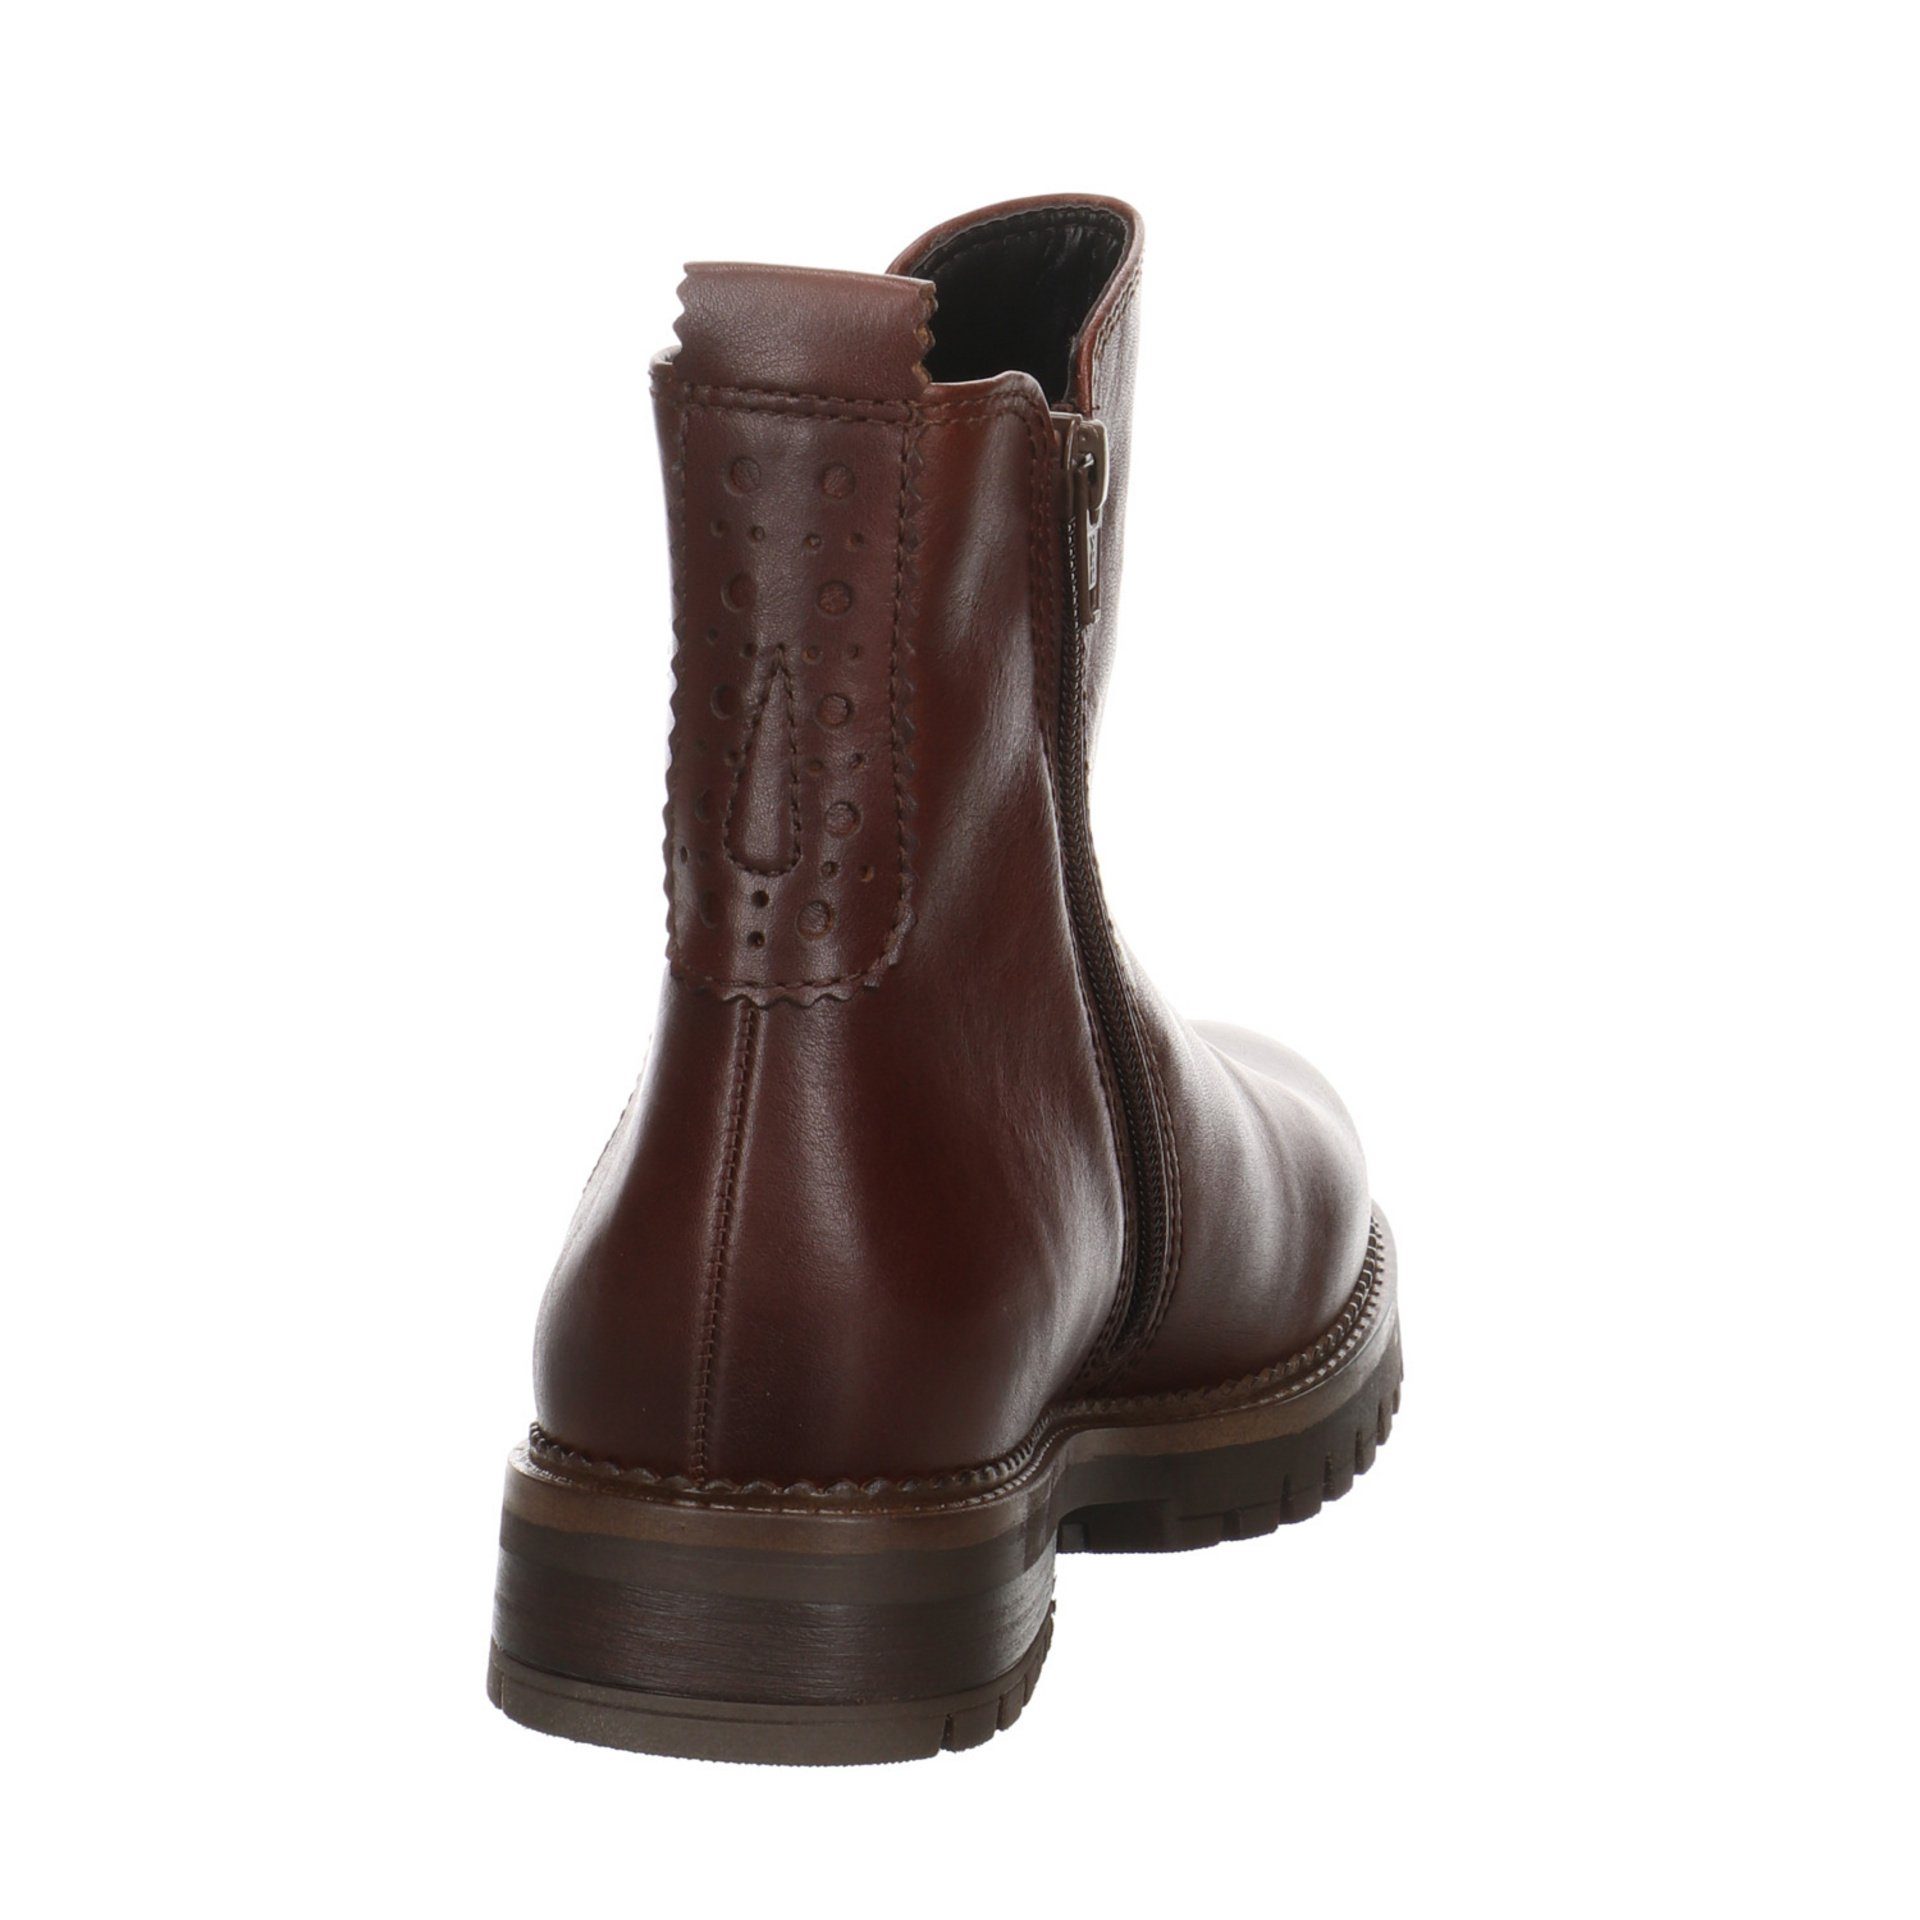 Stiefel Damen sattel Schuhe (river) Leder-/Textilkombination Chelsea Stiefel Boots Gabor